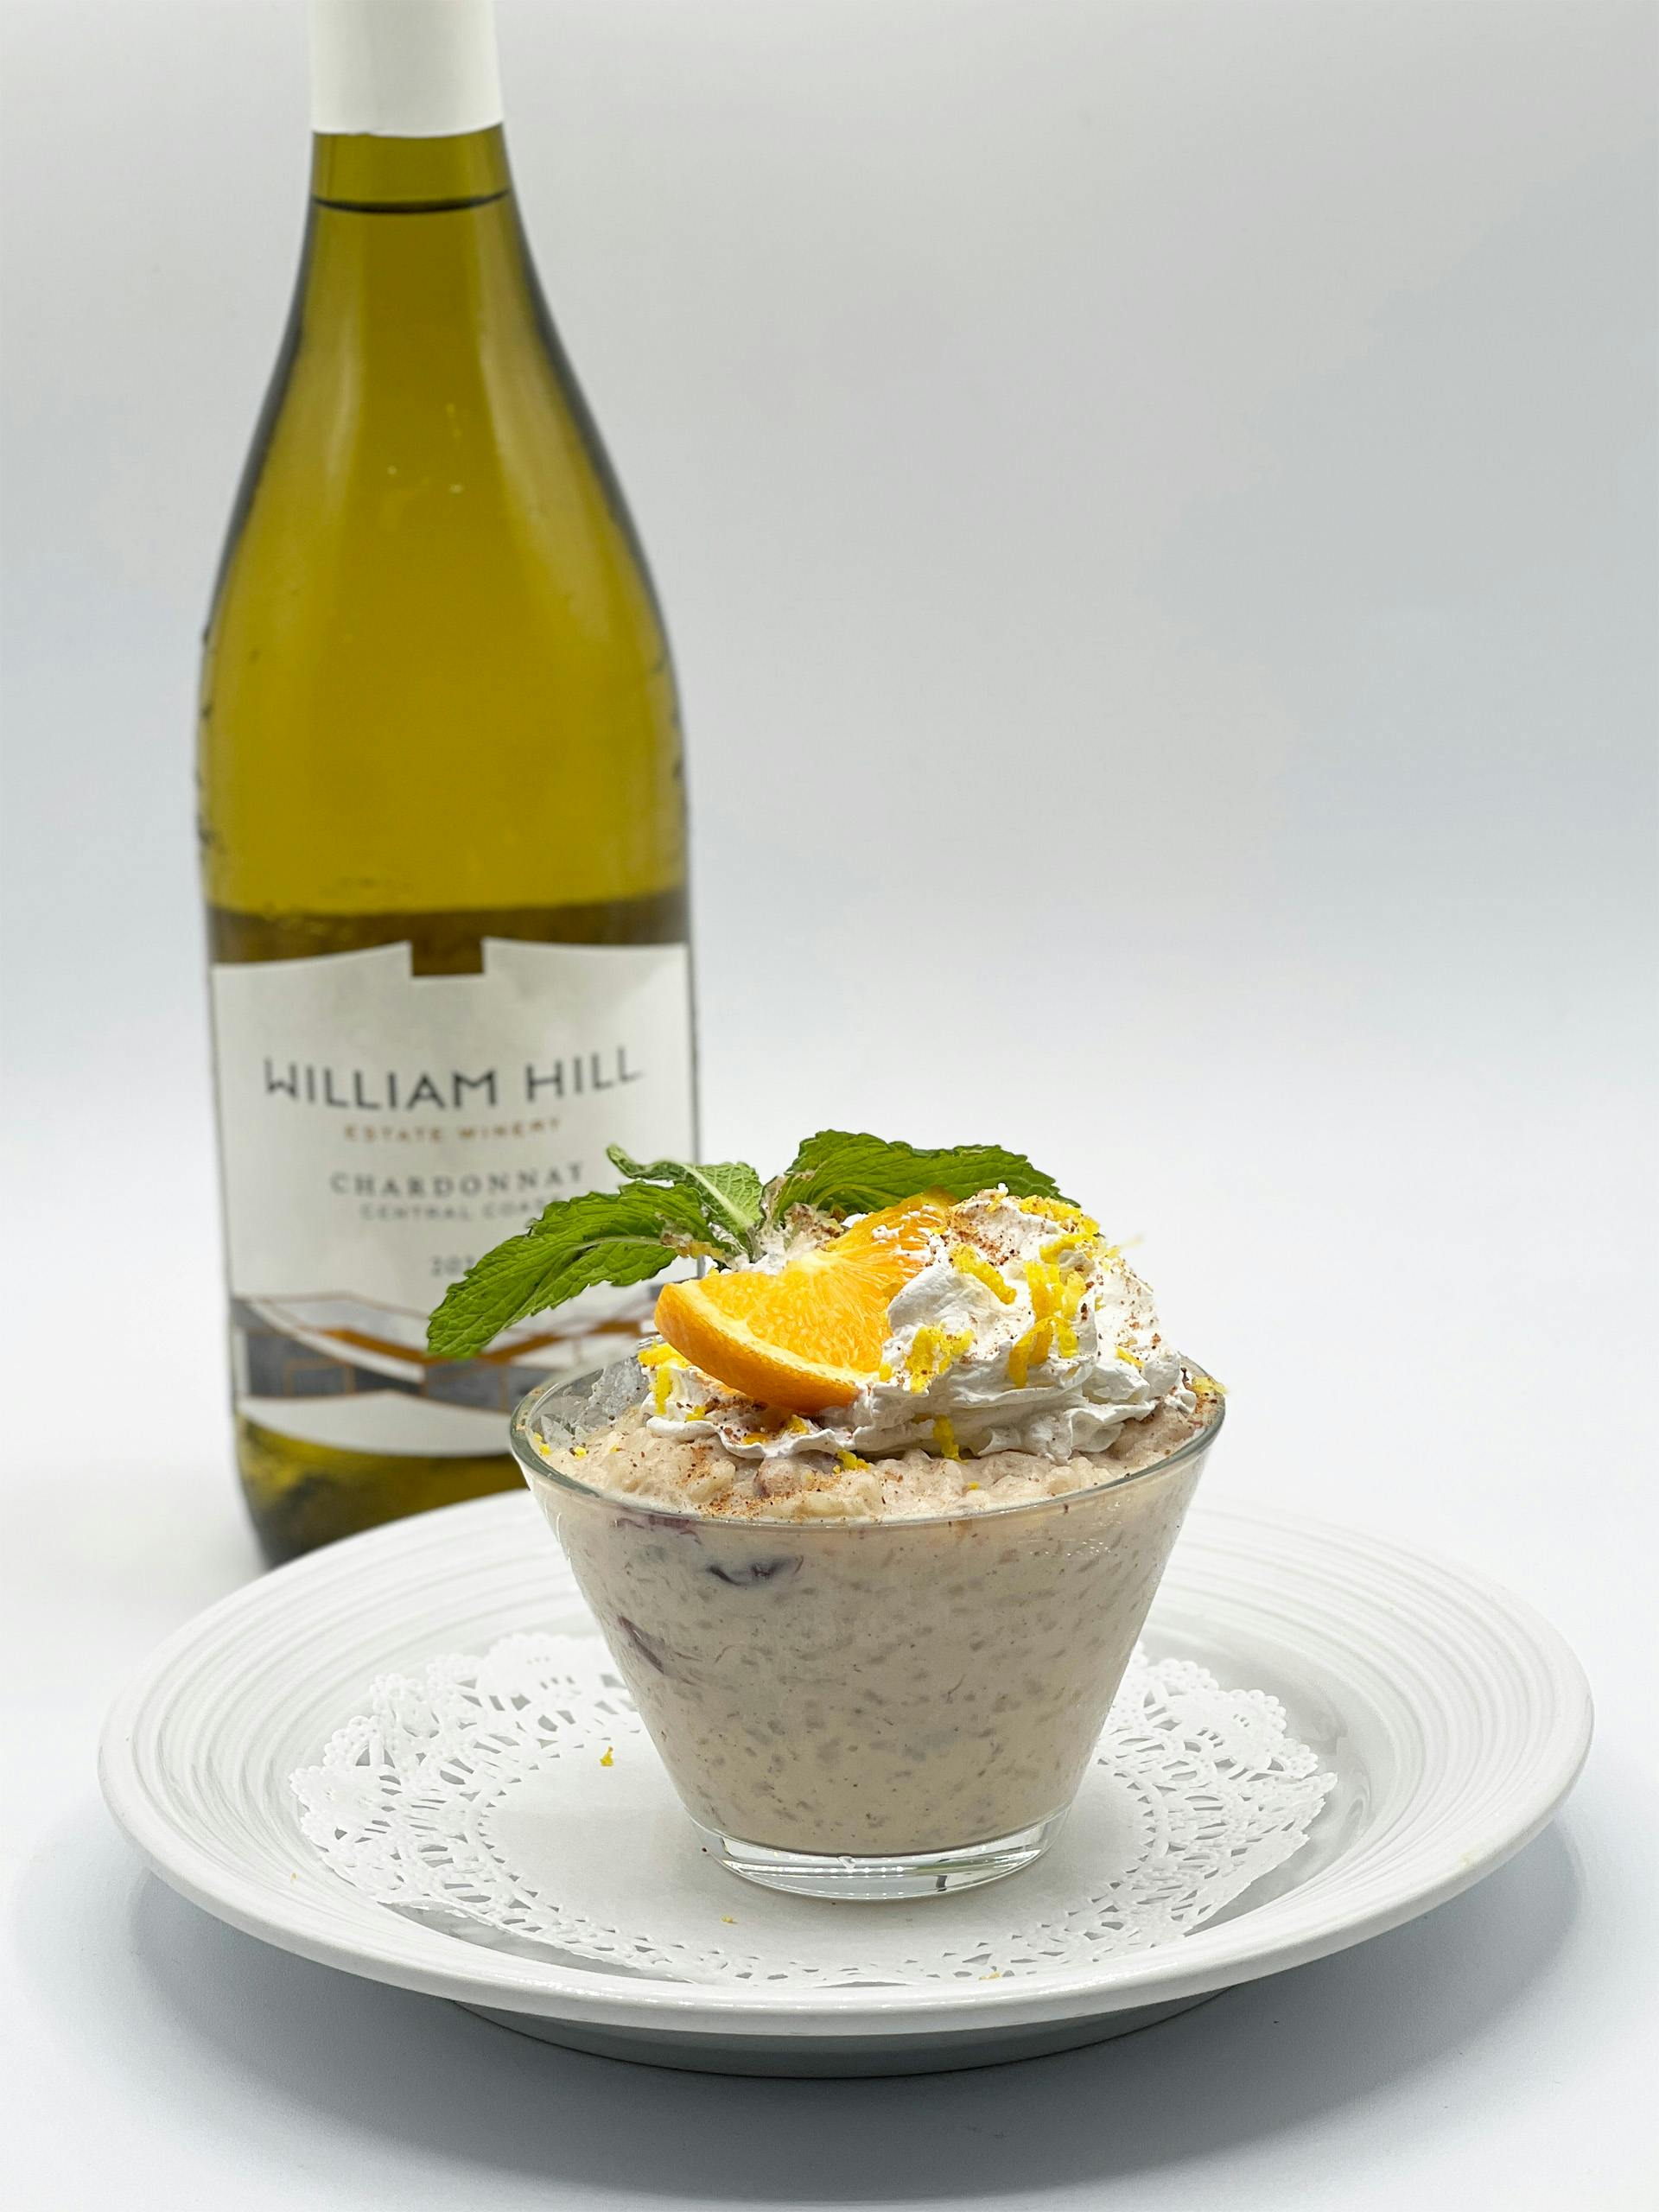 Fourth Course - Rice Pudding, Golden Raisins, Lemon and Orange Fresh Cream. Paired with William Hill Chardonnay.